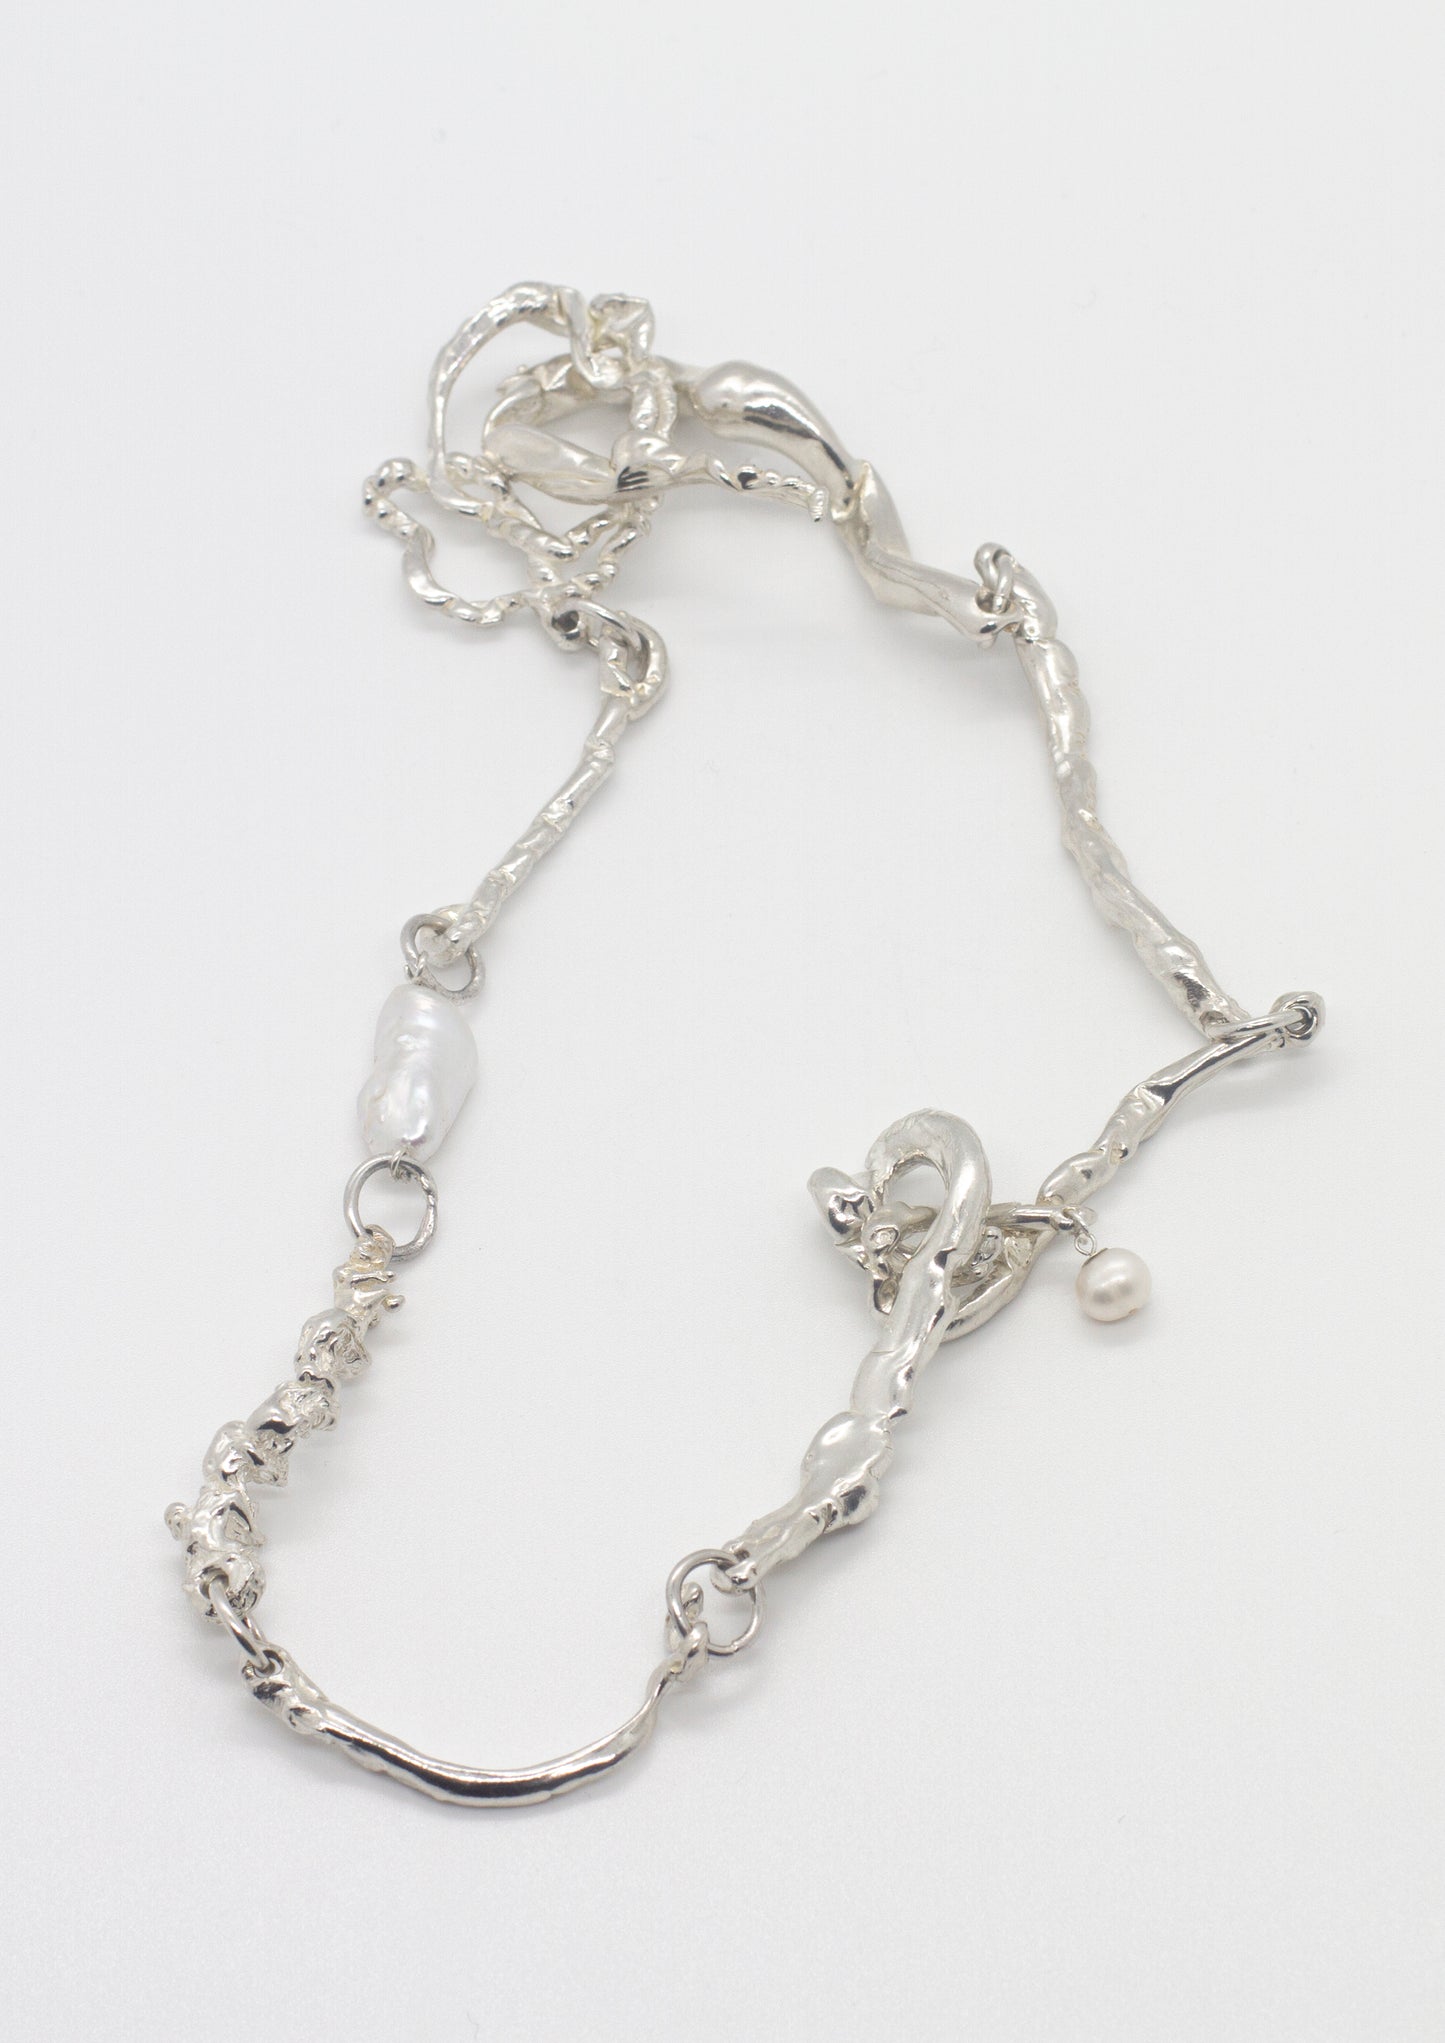 Bespoke 16" Curdled Chain